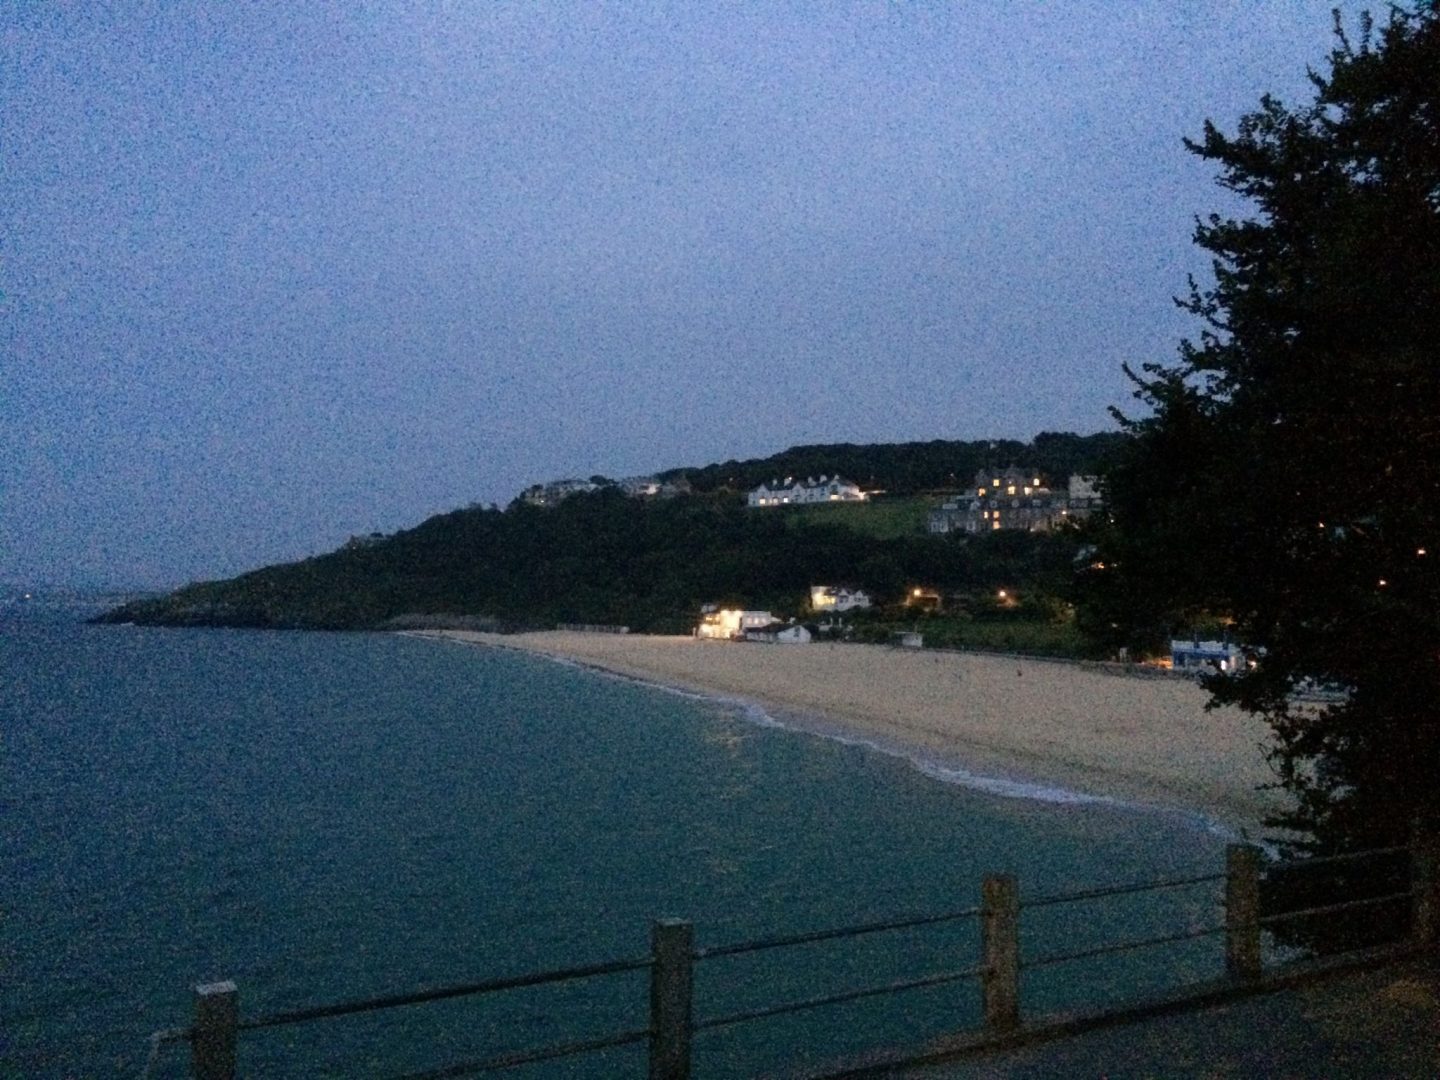 Night time views across Carbis Bay, Cornwall